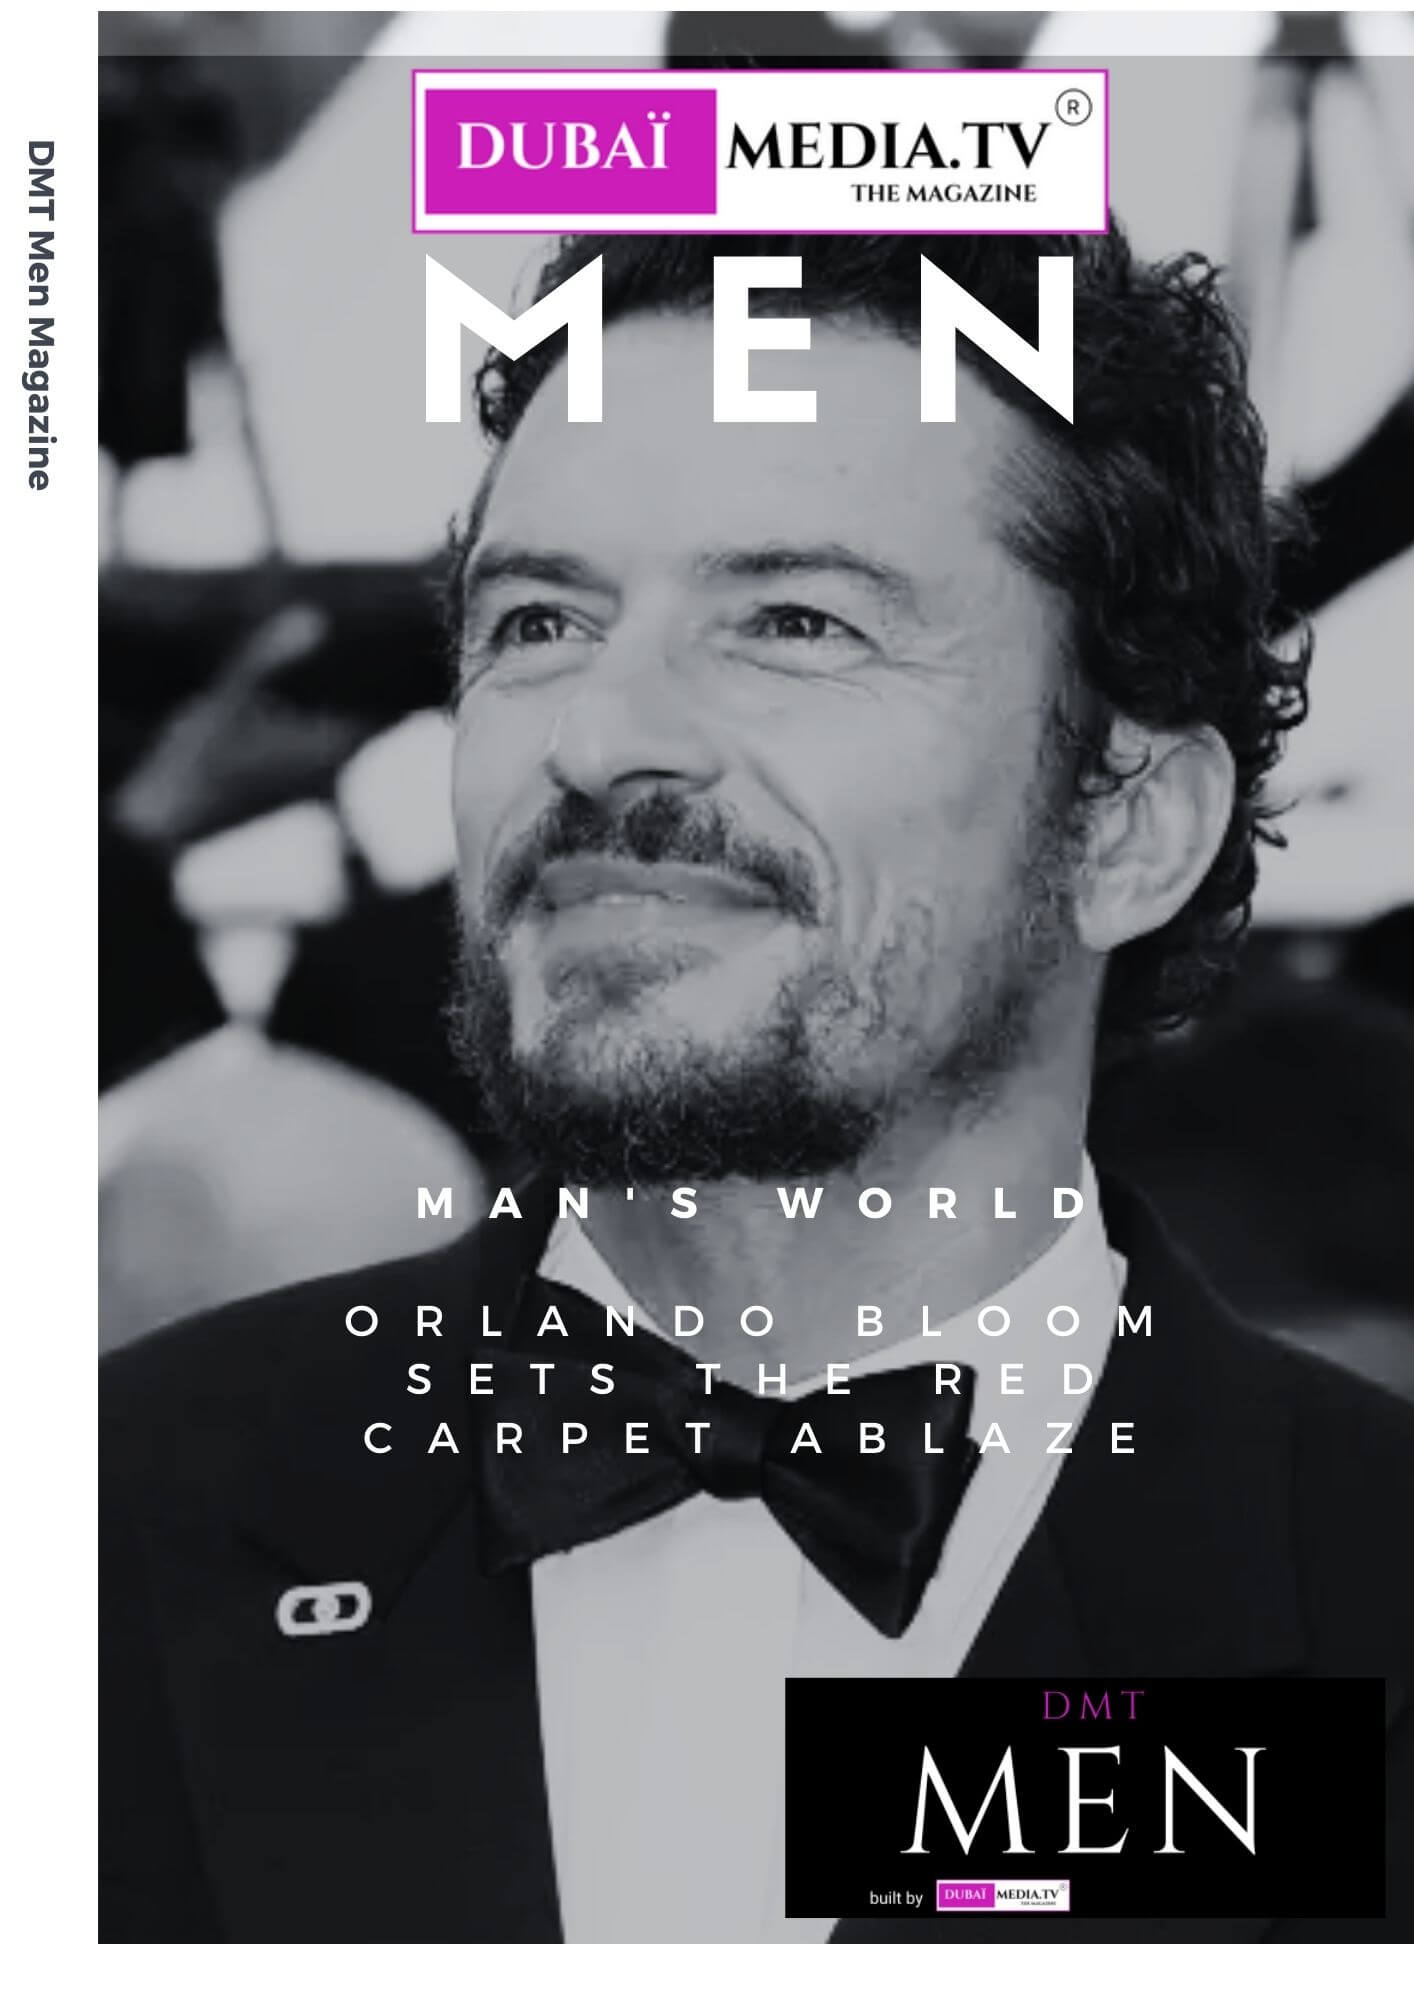 Men Magazine Dubai Media Tv (1)